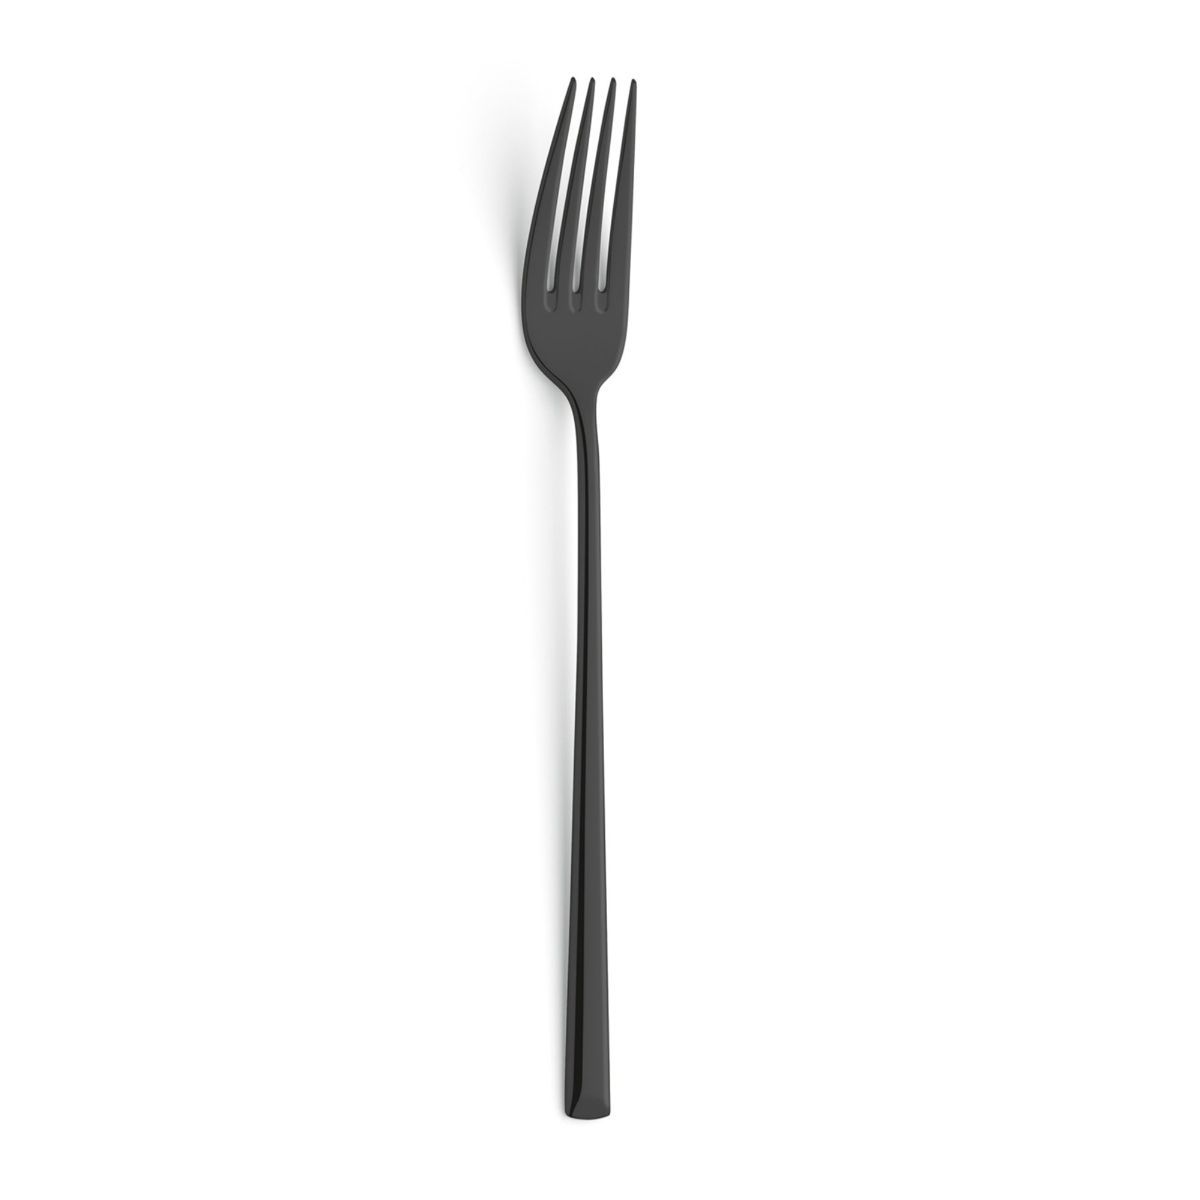 Amefa Metropole Black Stainless Steel Dinner Fork Set, 6-Pieces